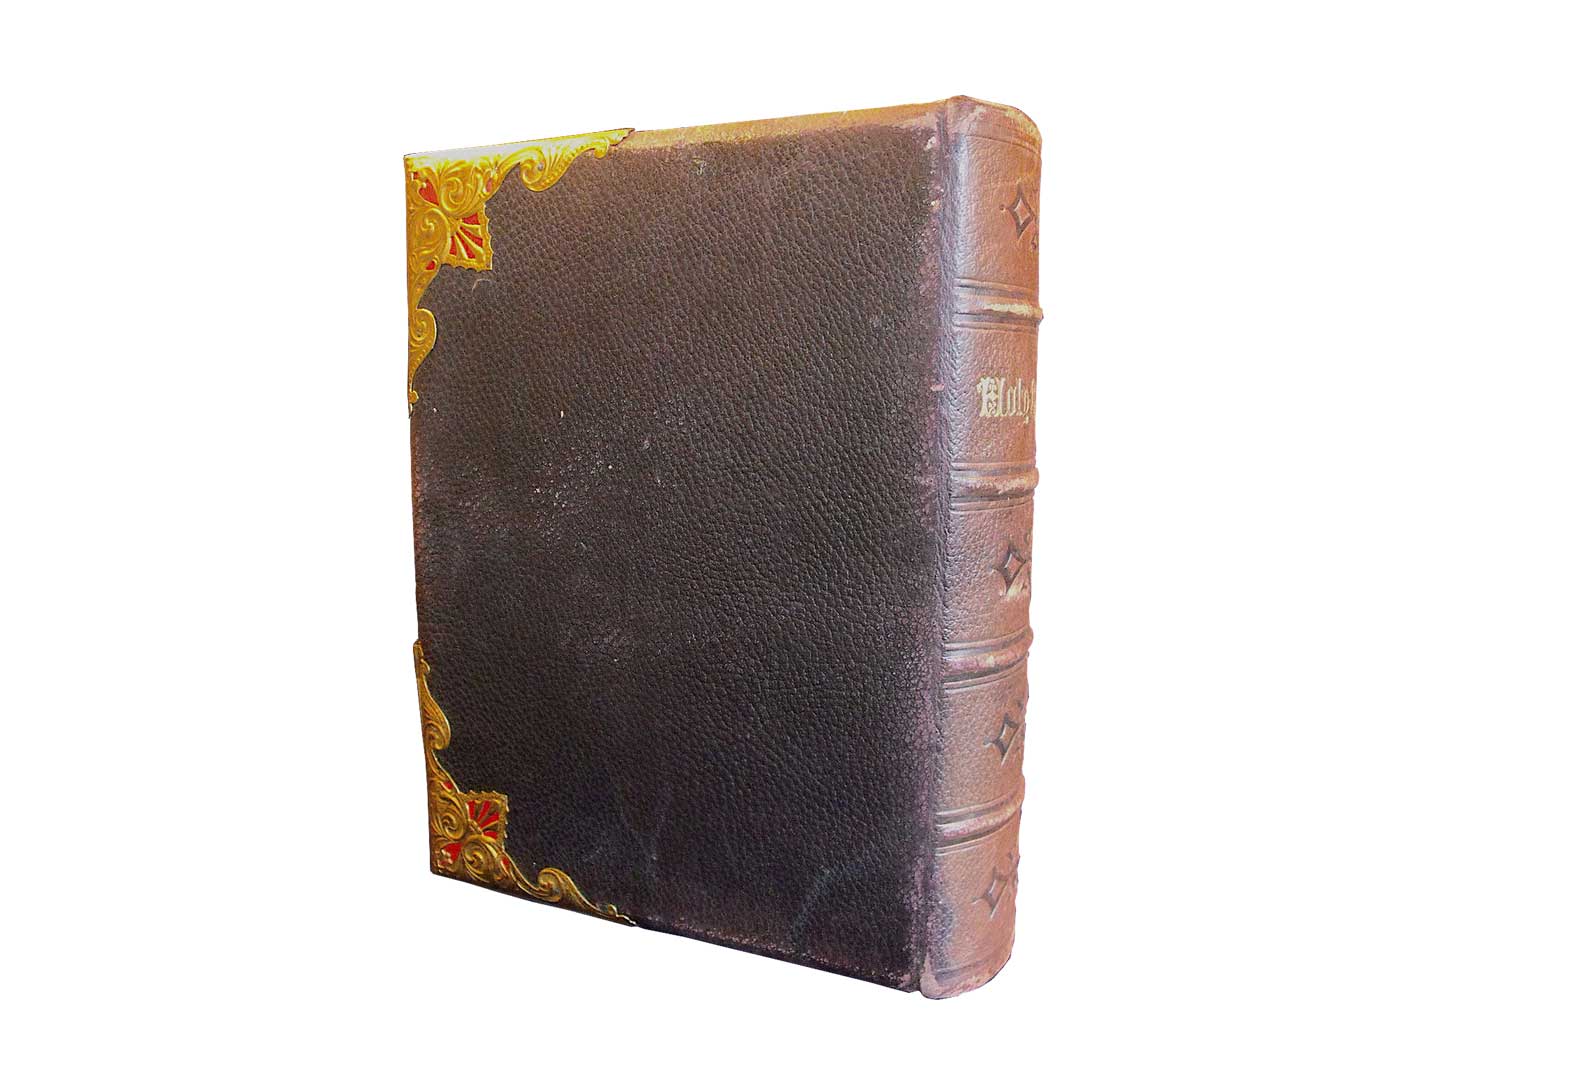 Bible back cover - Sussex Book Restoration